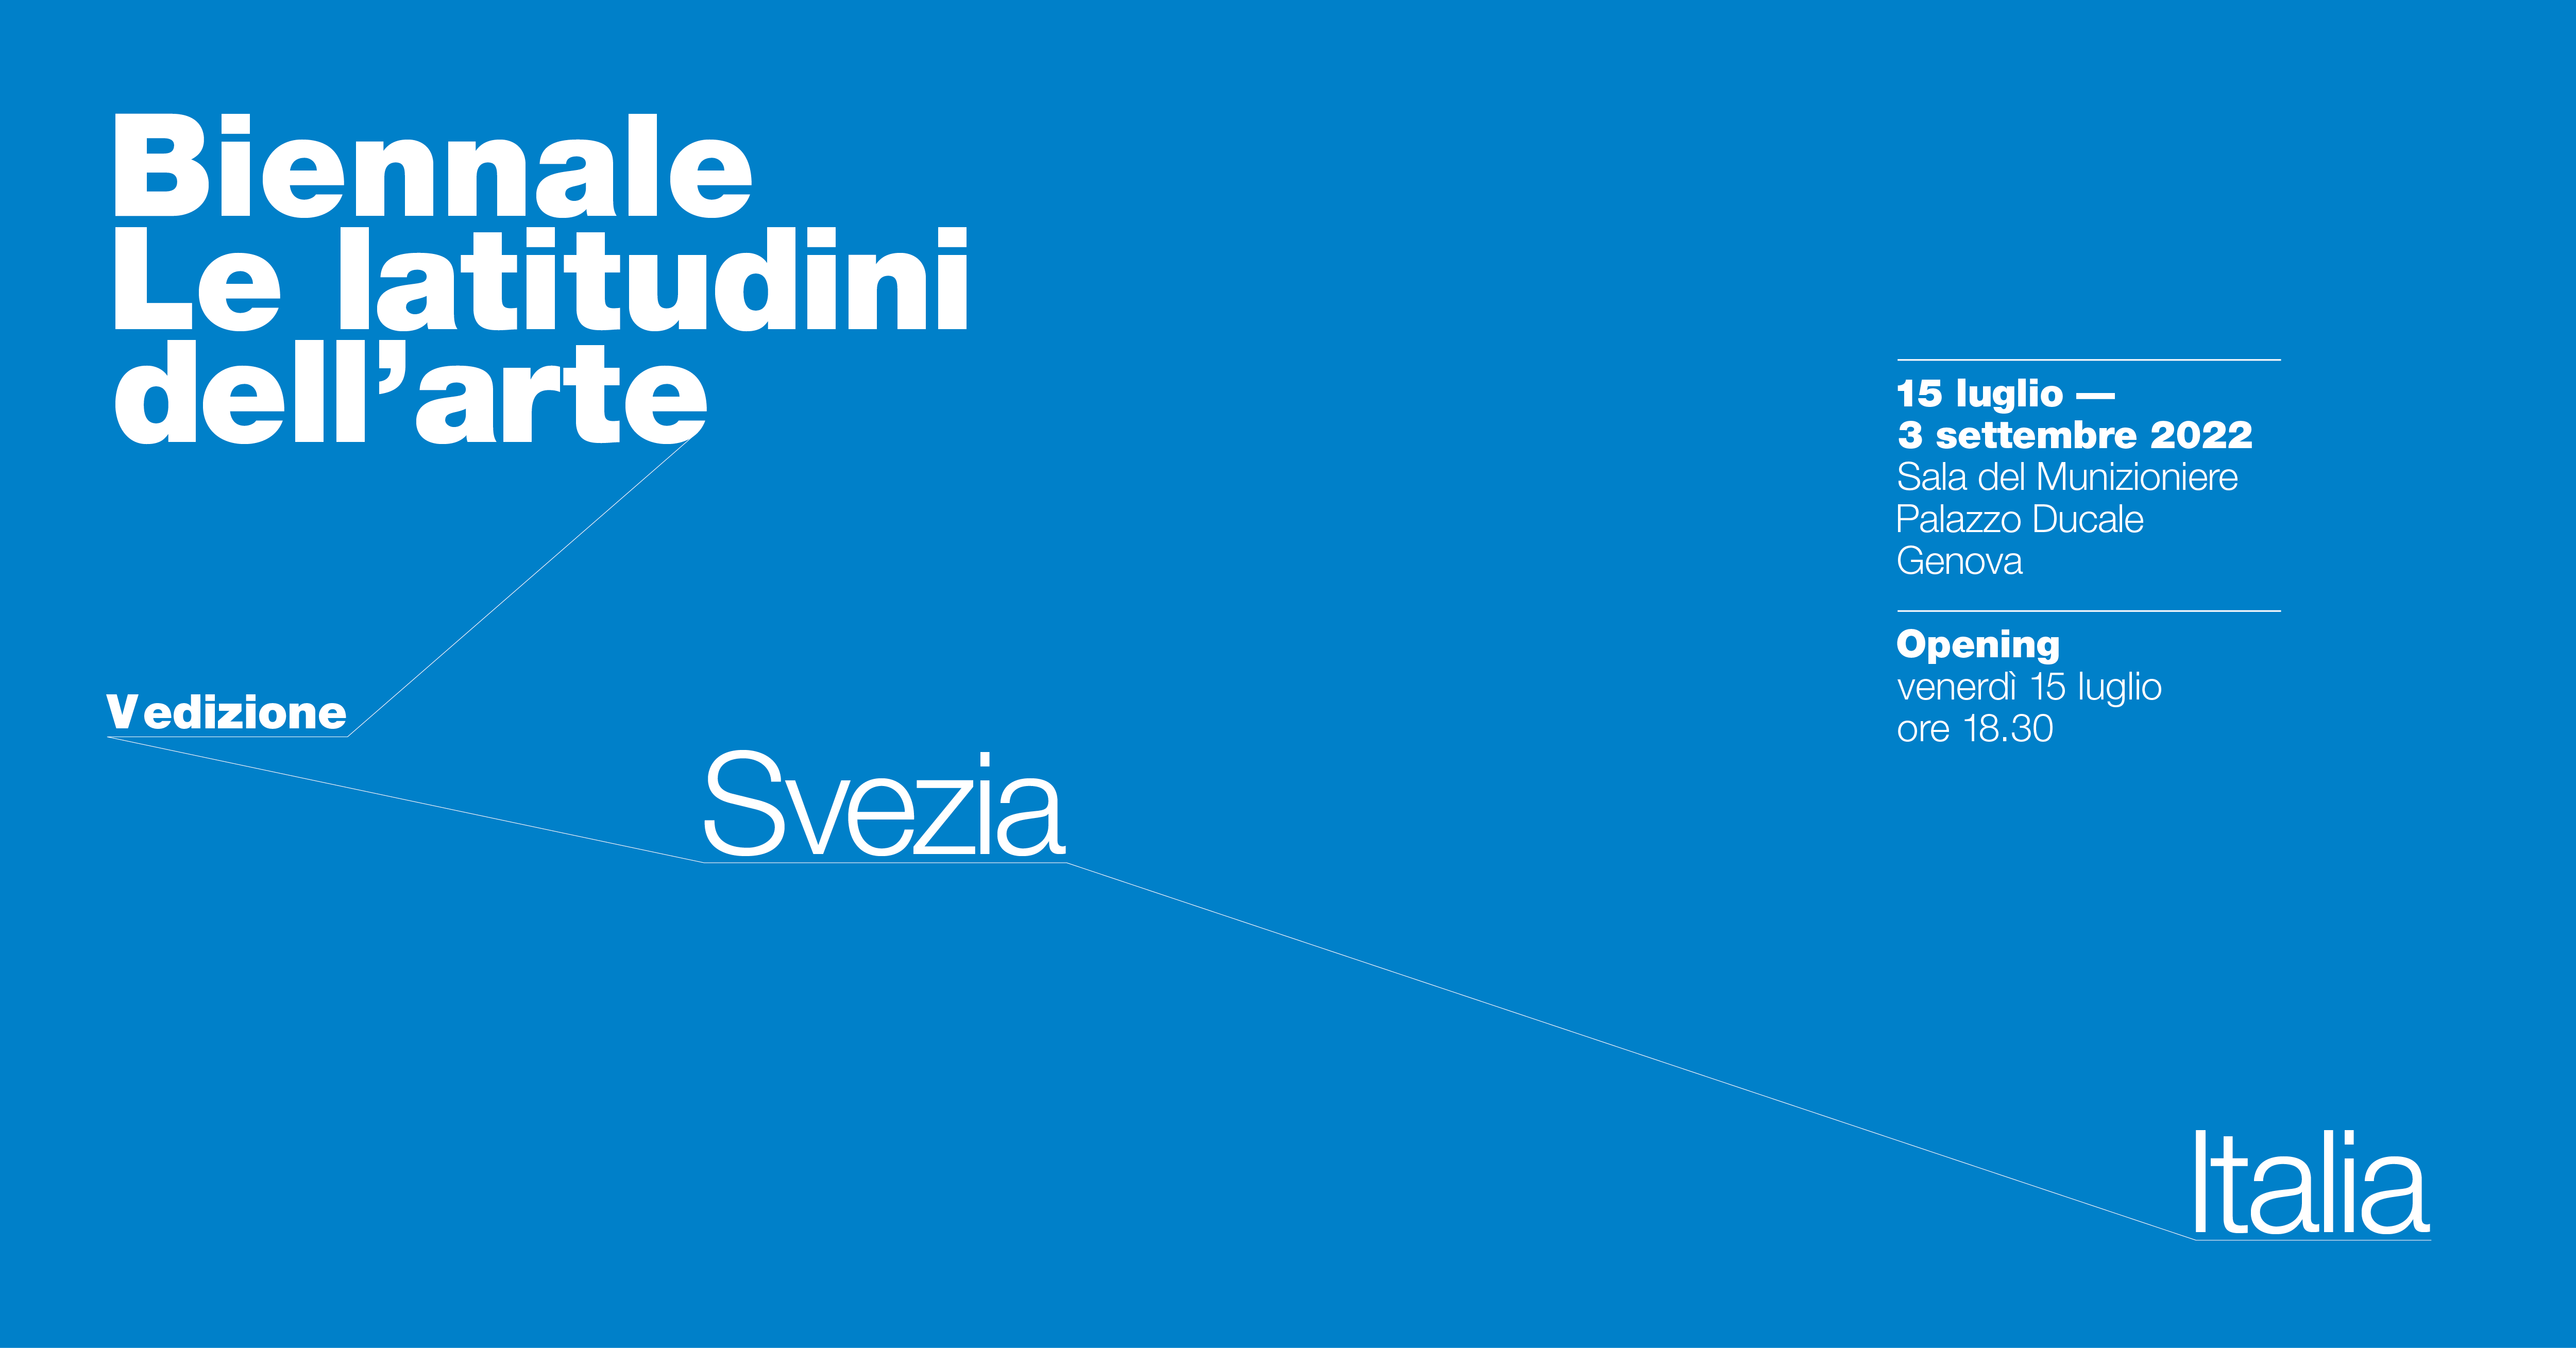 Biennale Latitudini dell'Arte 2022 - Svezia Italia